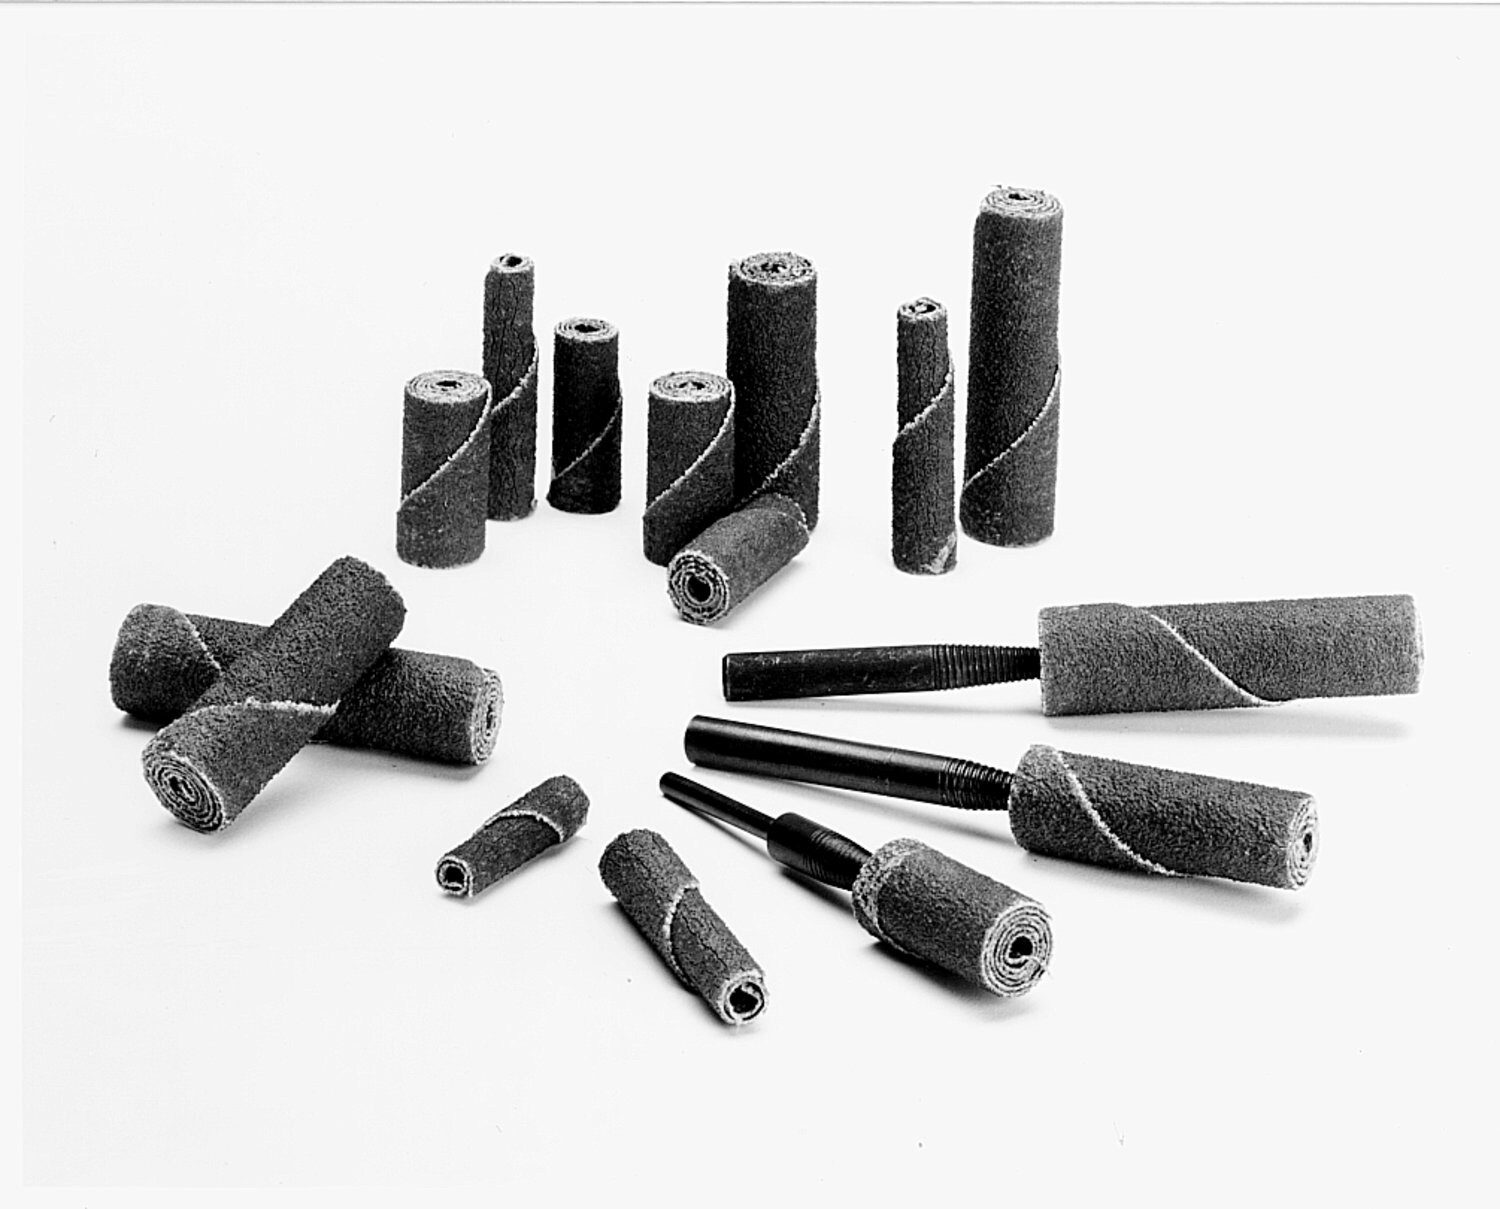 7010331313 - Standard Abrasives Ceramic Cartridge Roll, 730084, CR-ST, 120, 3/8 in x
1-1/2 in x 1/8 in, Straight, 100 ea/Case